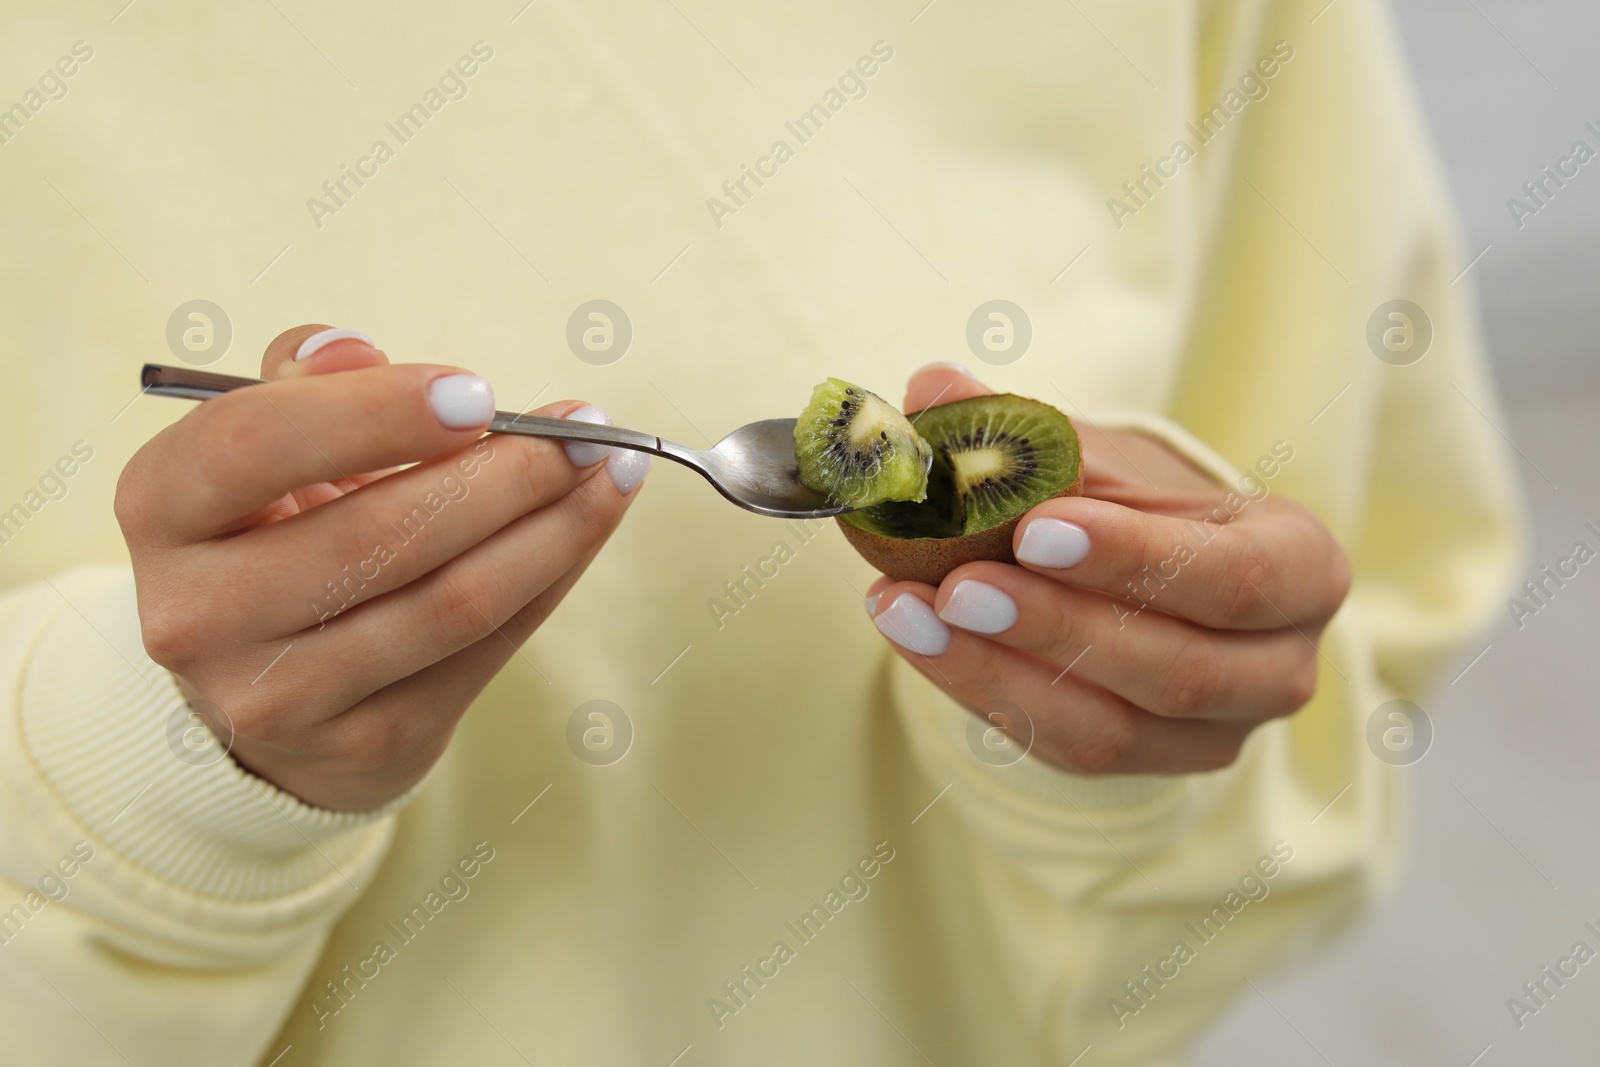 Photo of Woman eating kiwi with spoon, closeup view